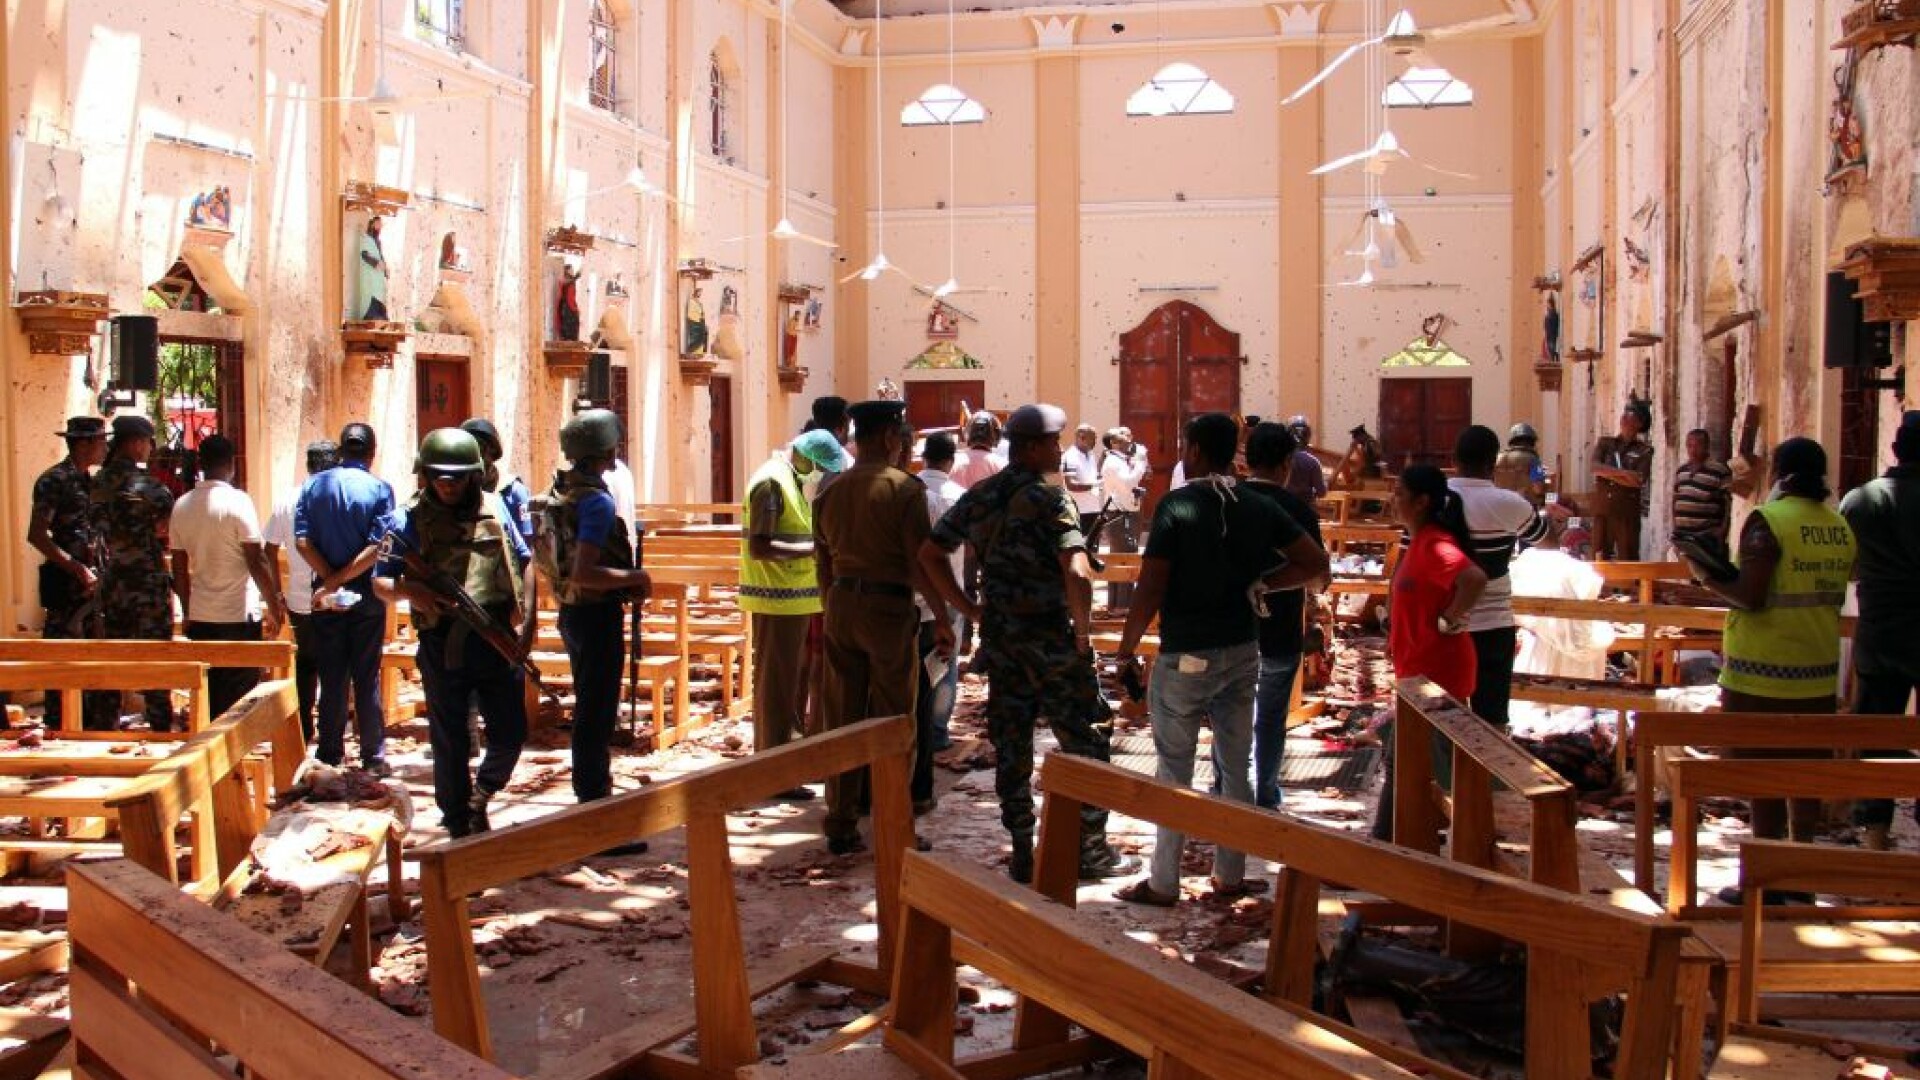 Atentat in Sri Lanka in ziua de Paste: imagini din biserica Sfantul Sebastian din Negombo